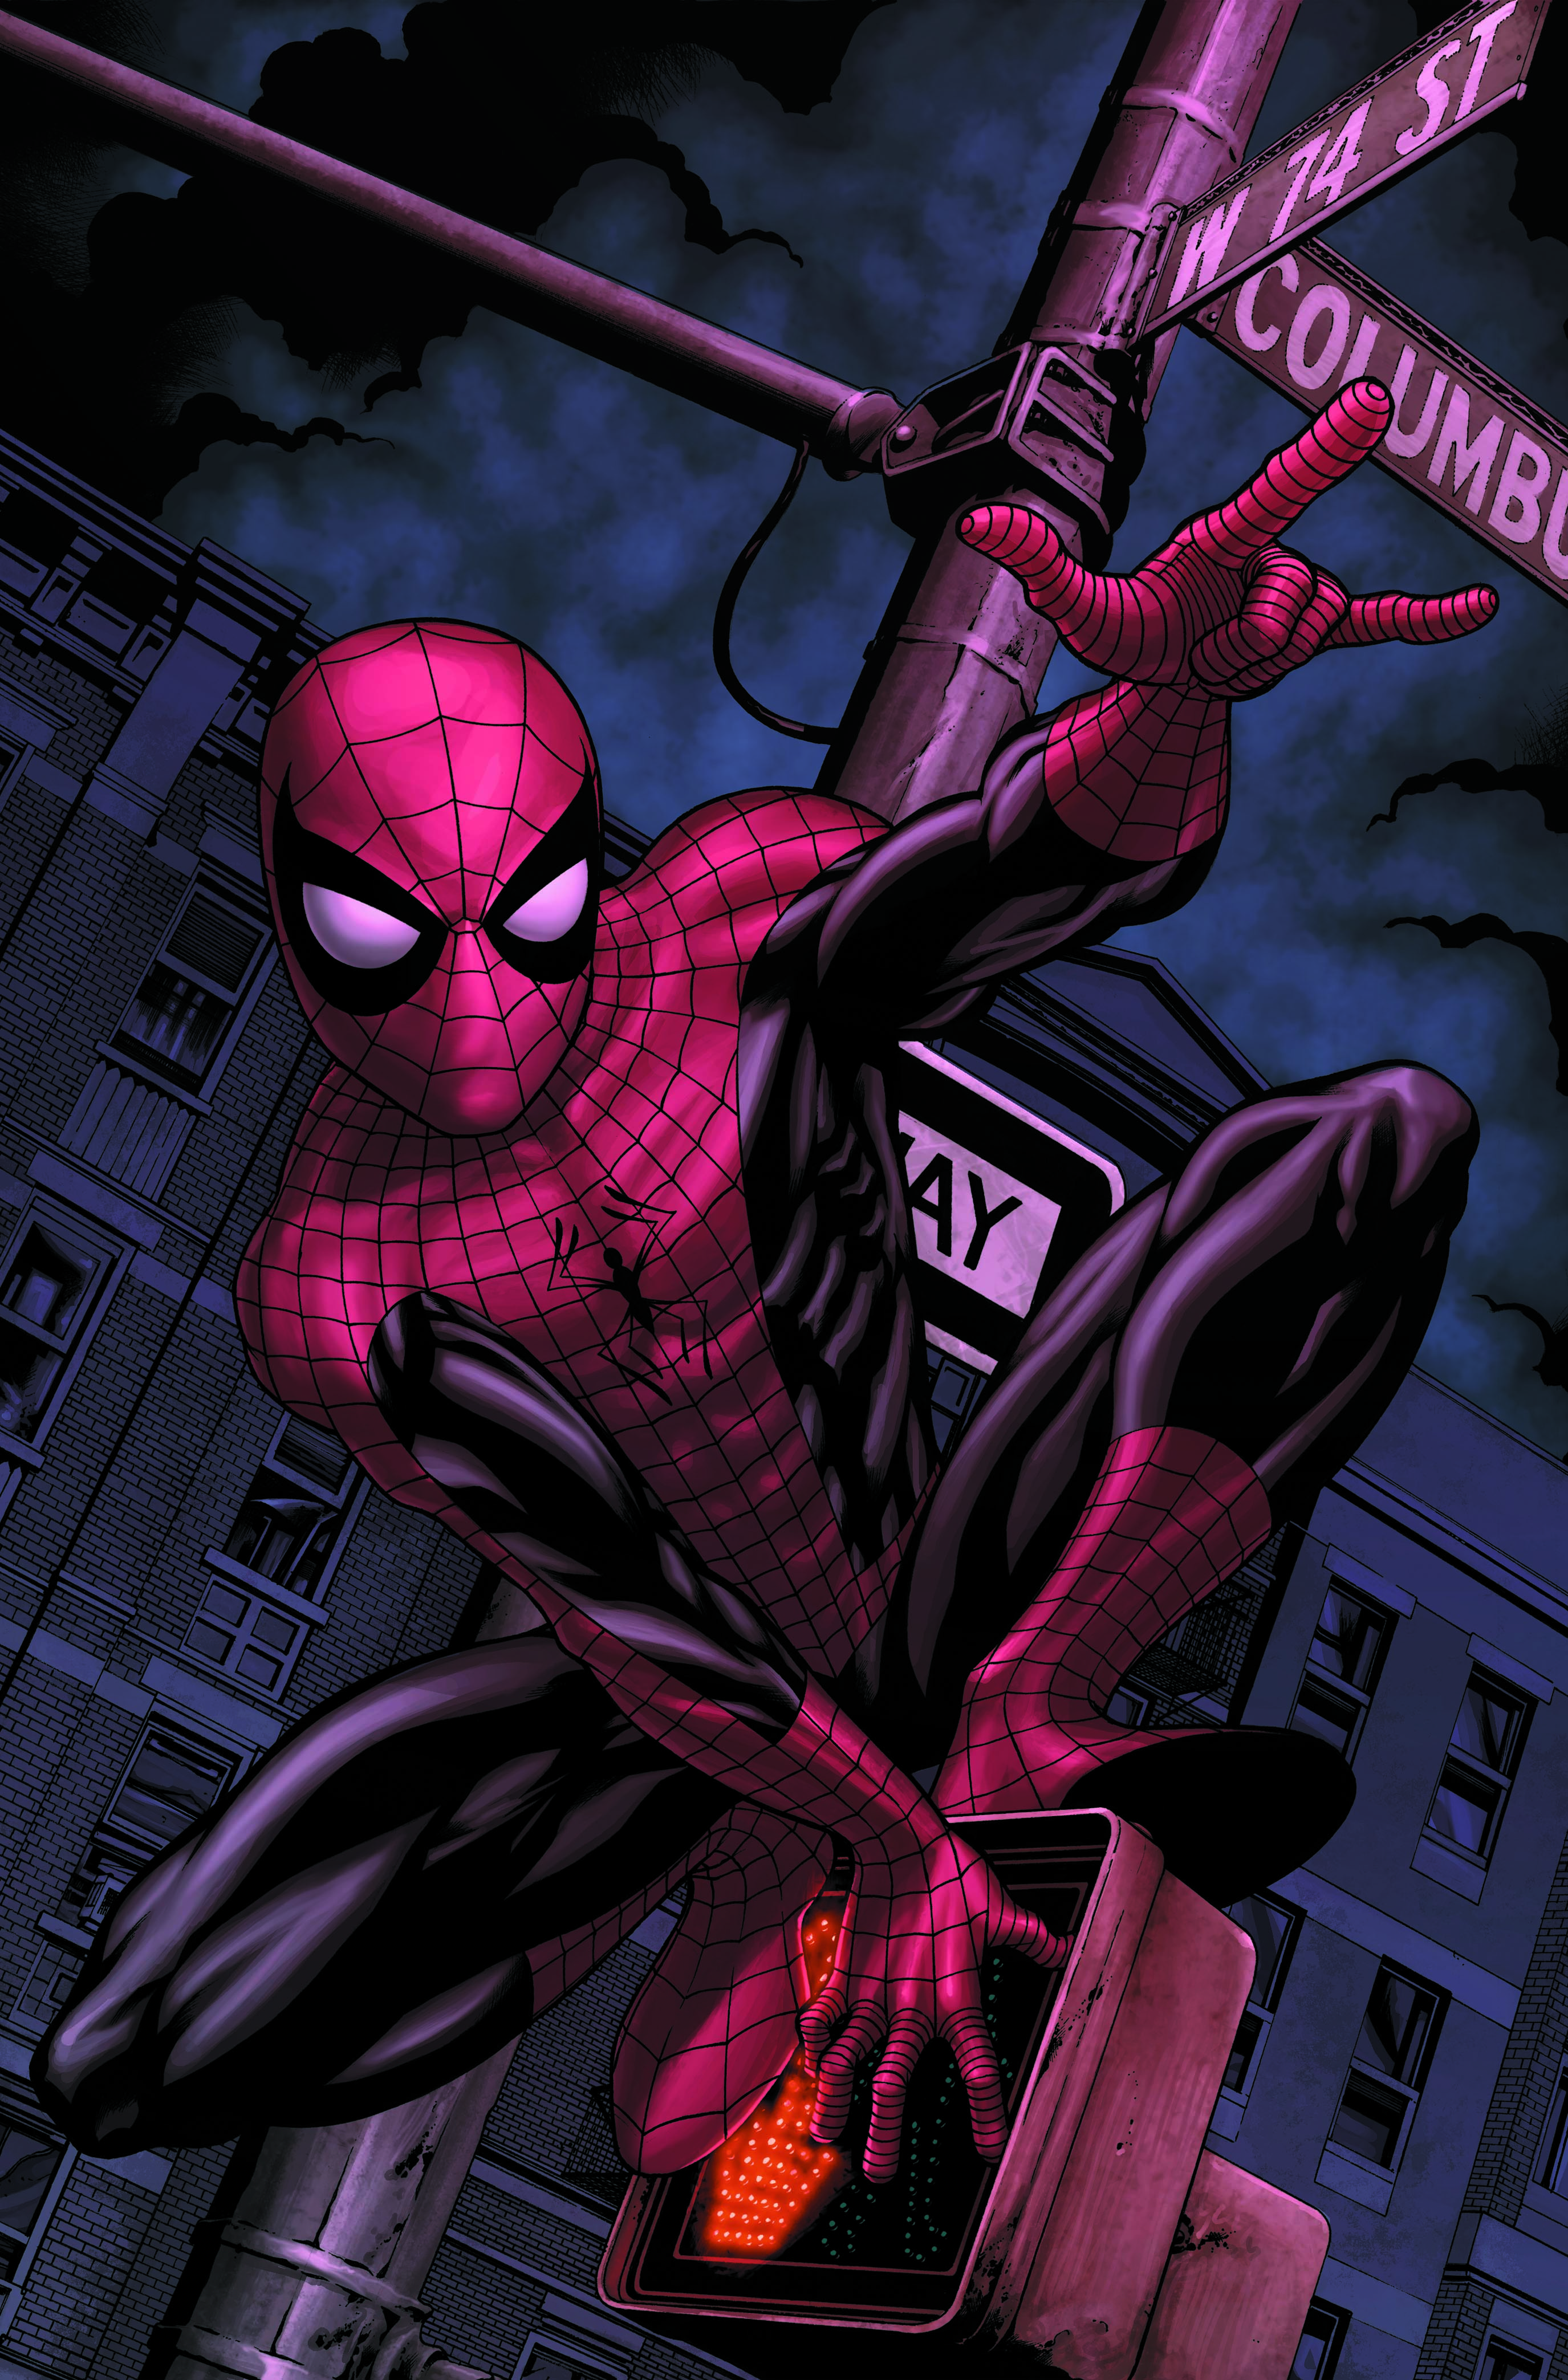 Web of Spider-Man (1985) #129.1